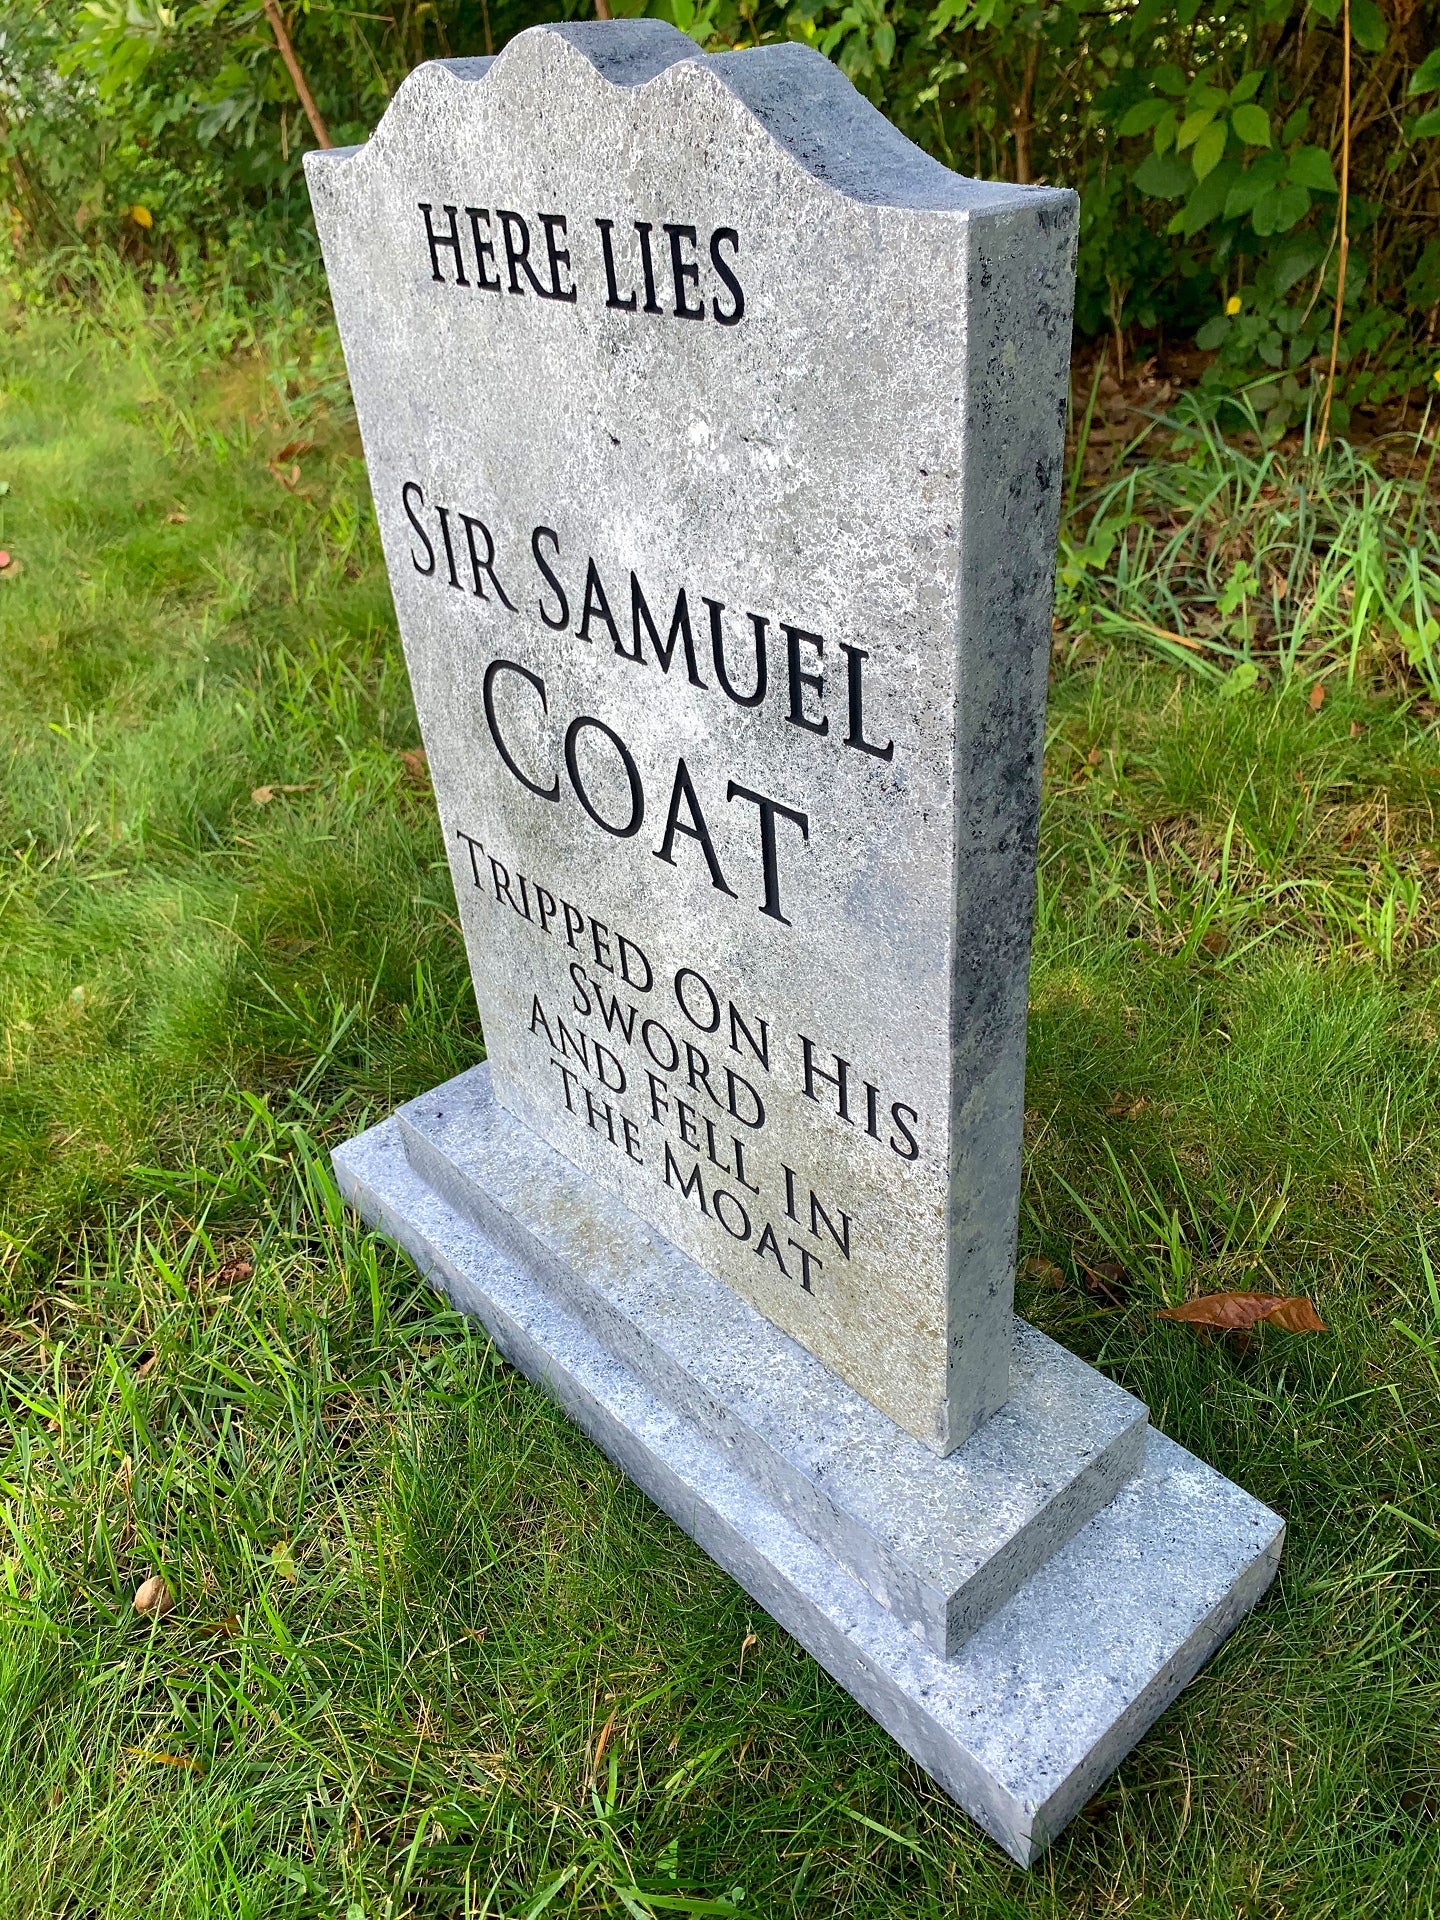 Sir Samuel Coat Funny / Comical Tombstone